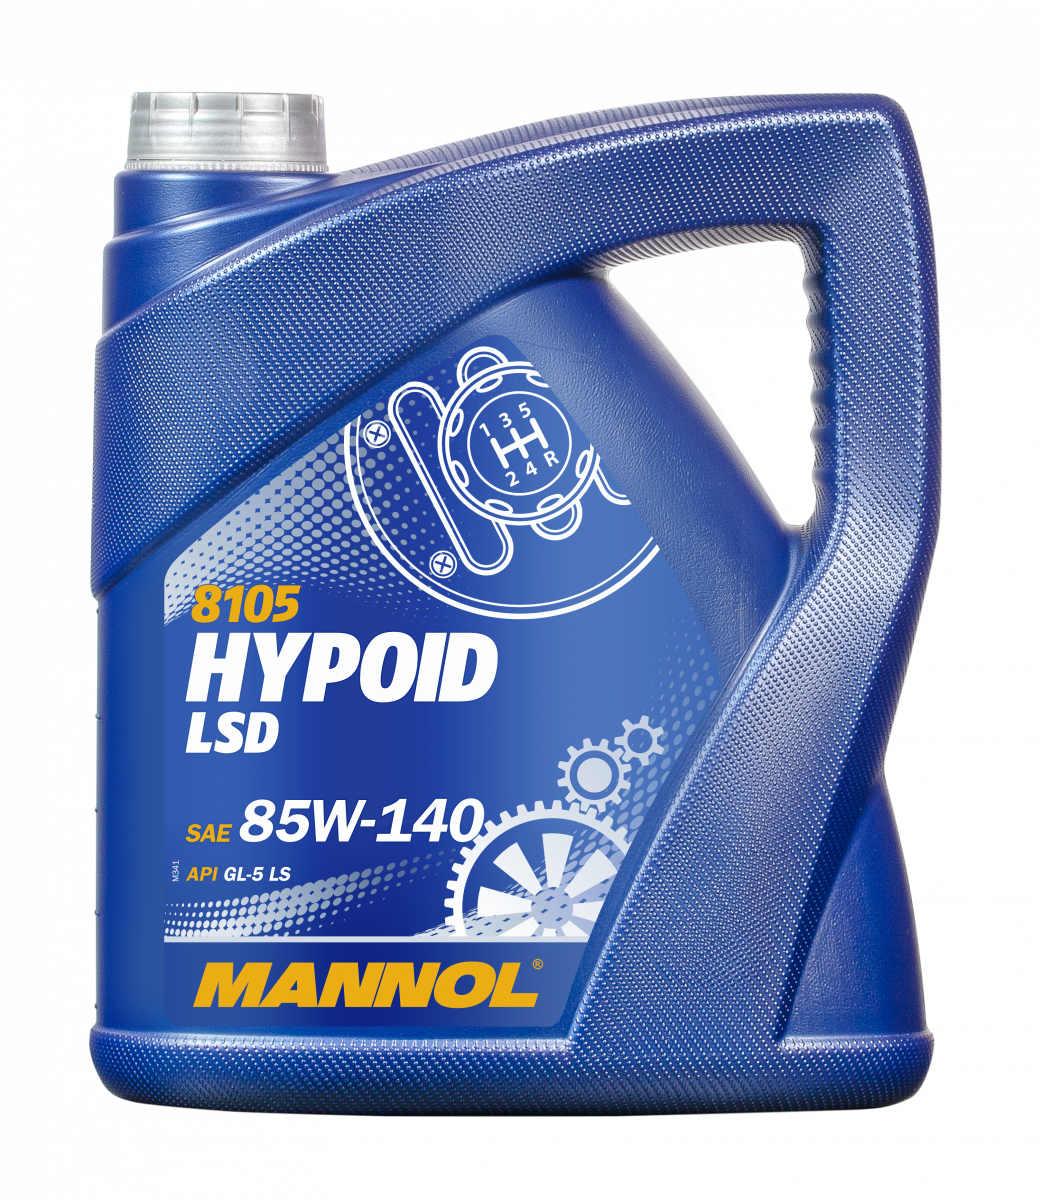 Mannol Hypoid LSD 85W-140 GL-5